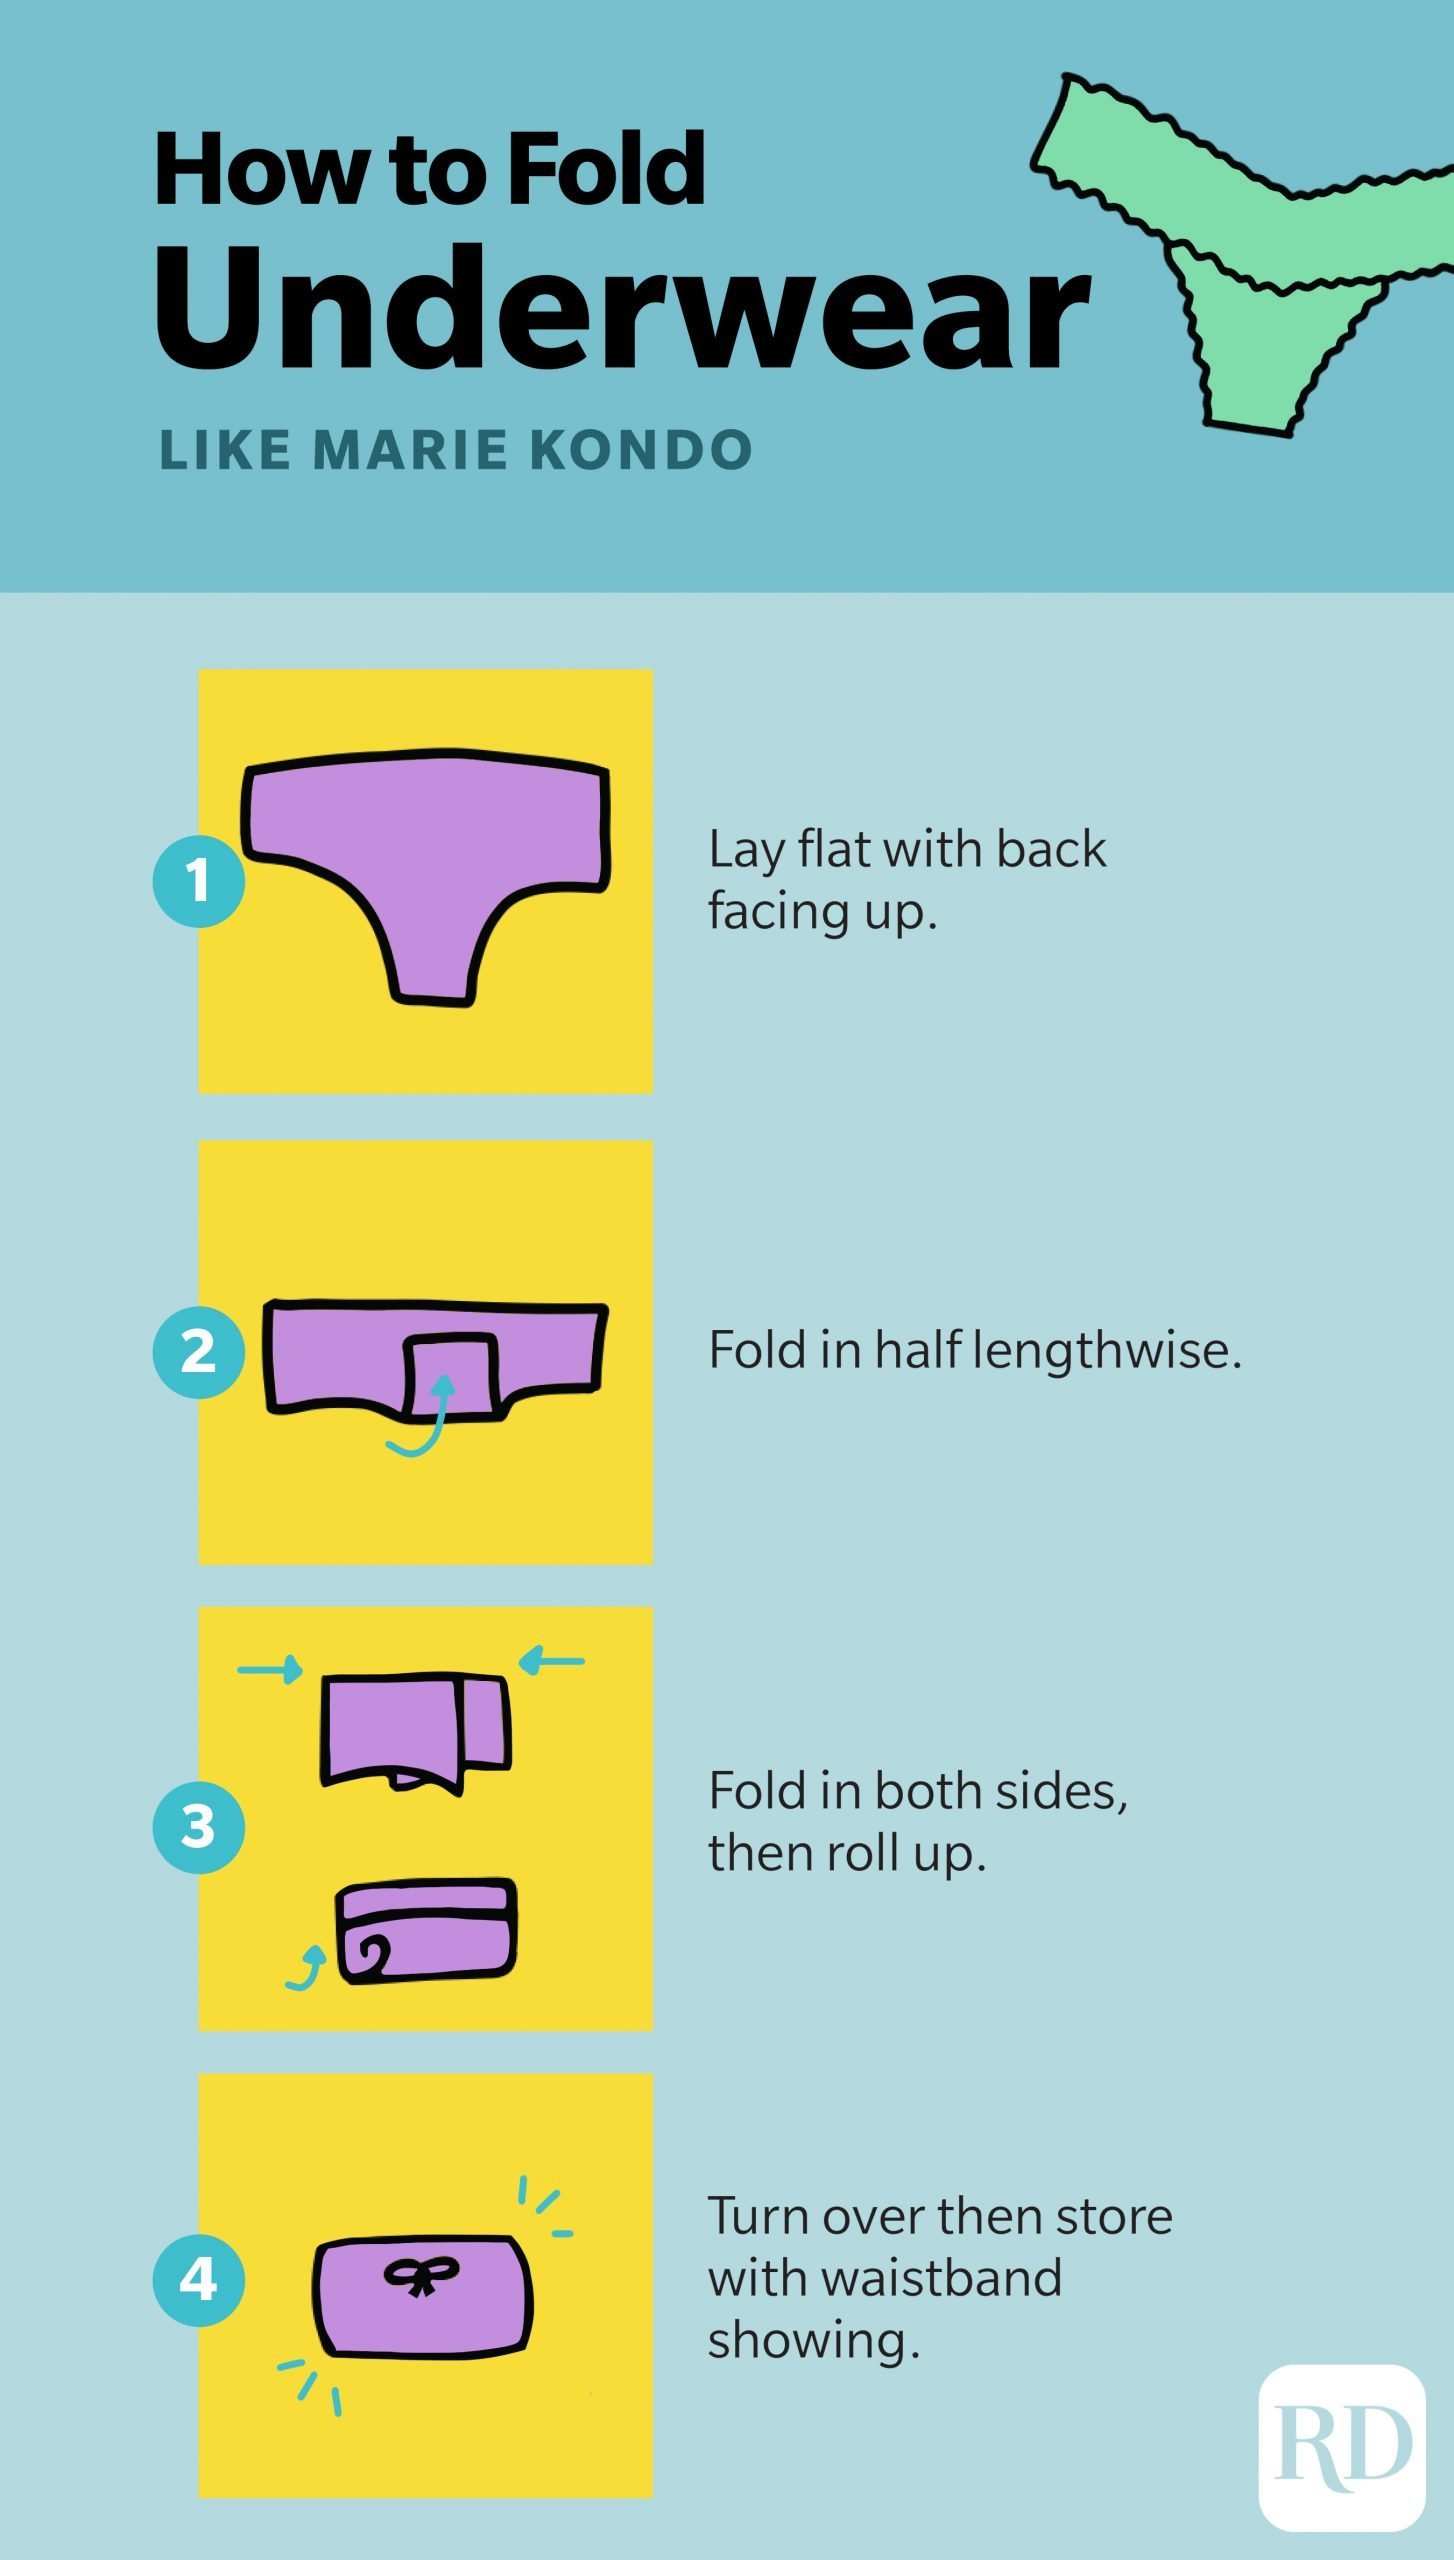 Marie Kondo Folding Guide: Learn the KonMari Folding Method | Trusted ...